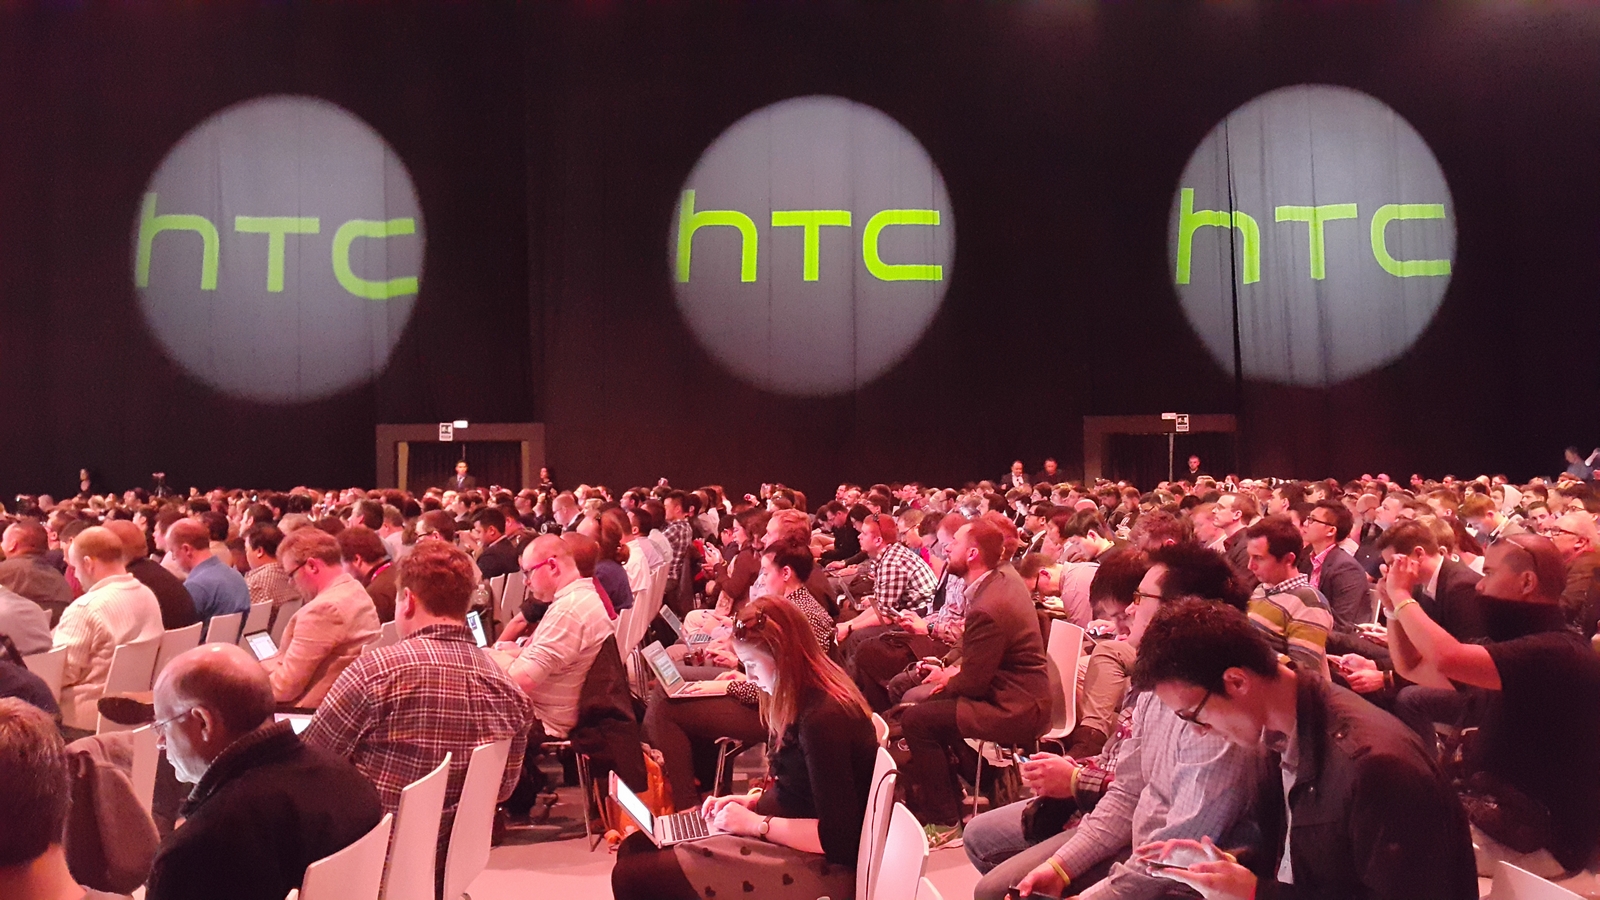 Konferencja HTC / fot. 2po2.pl